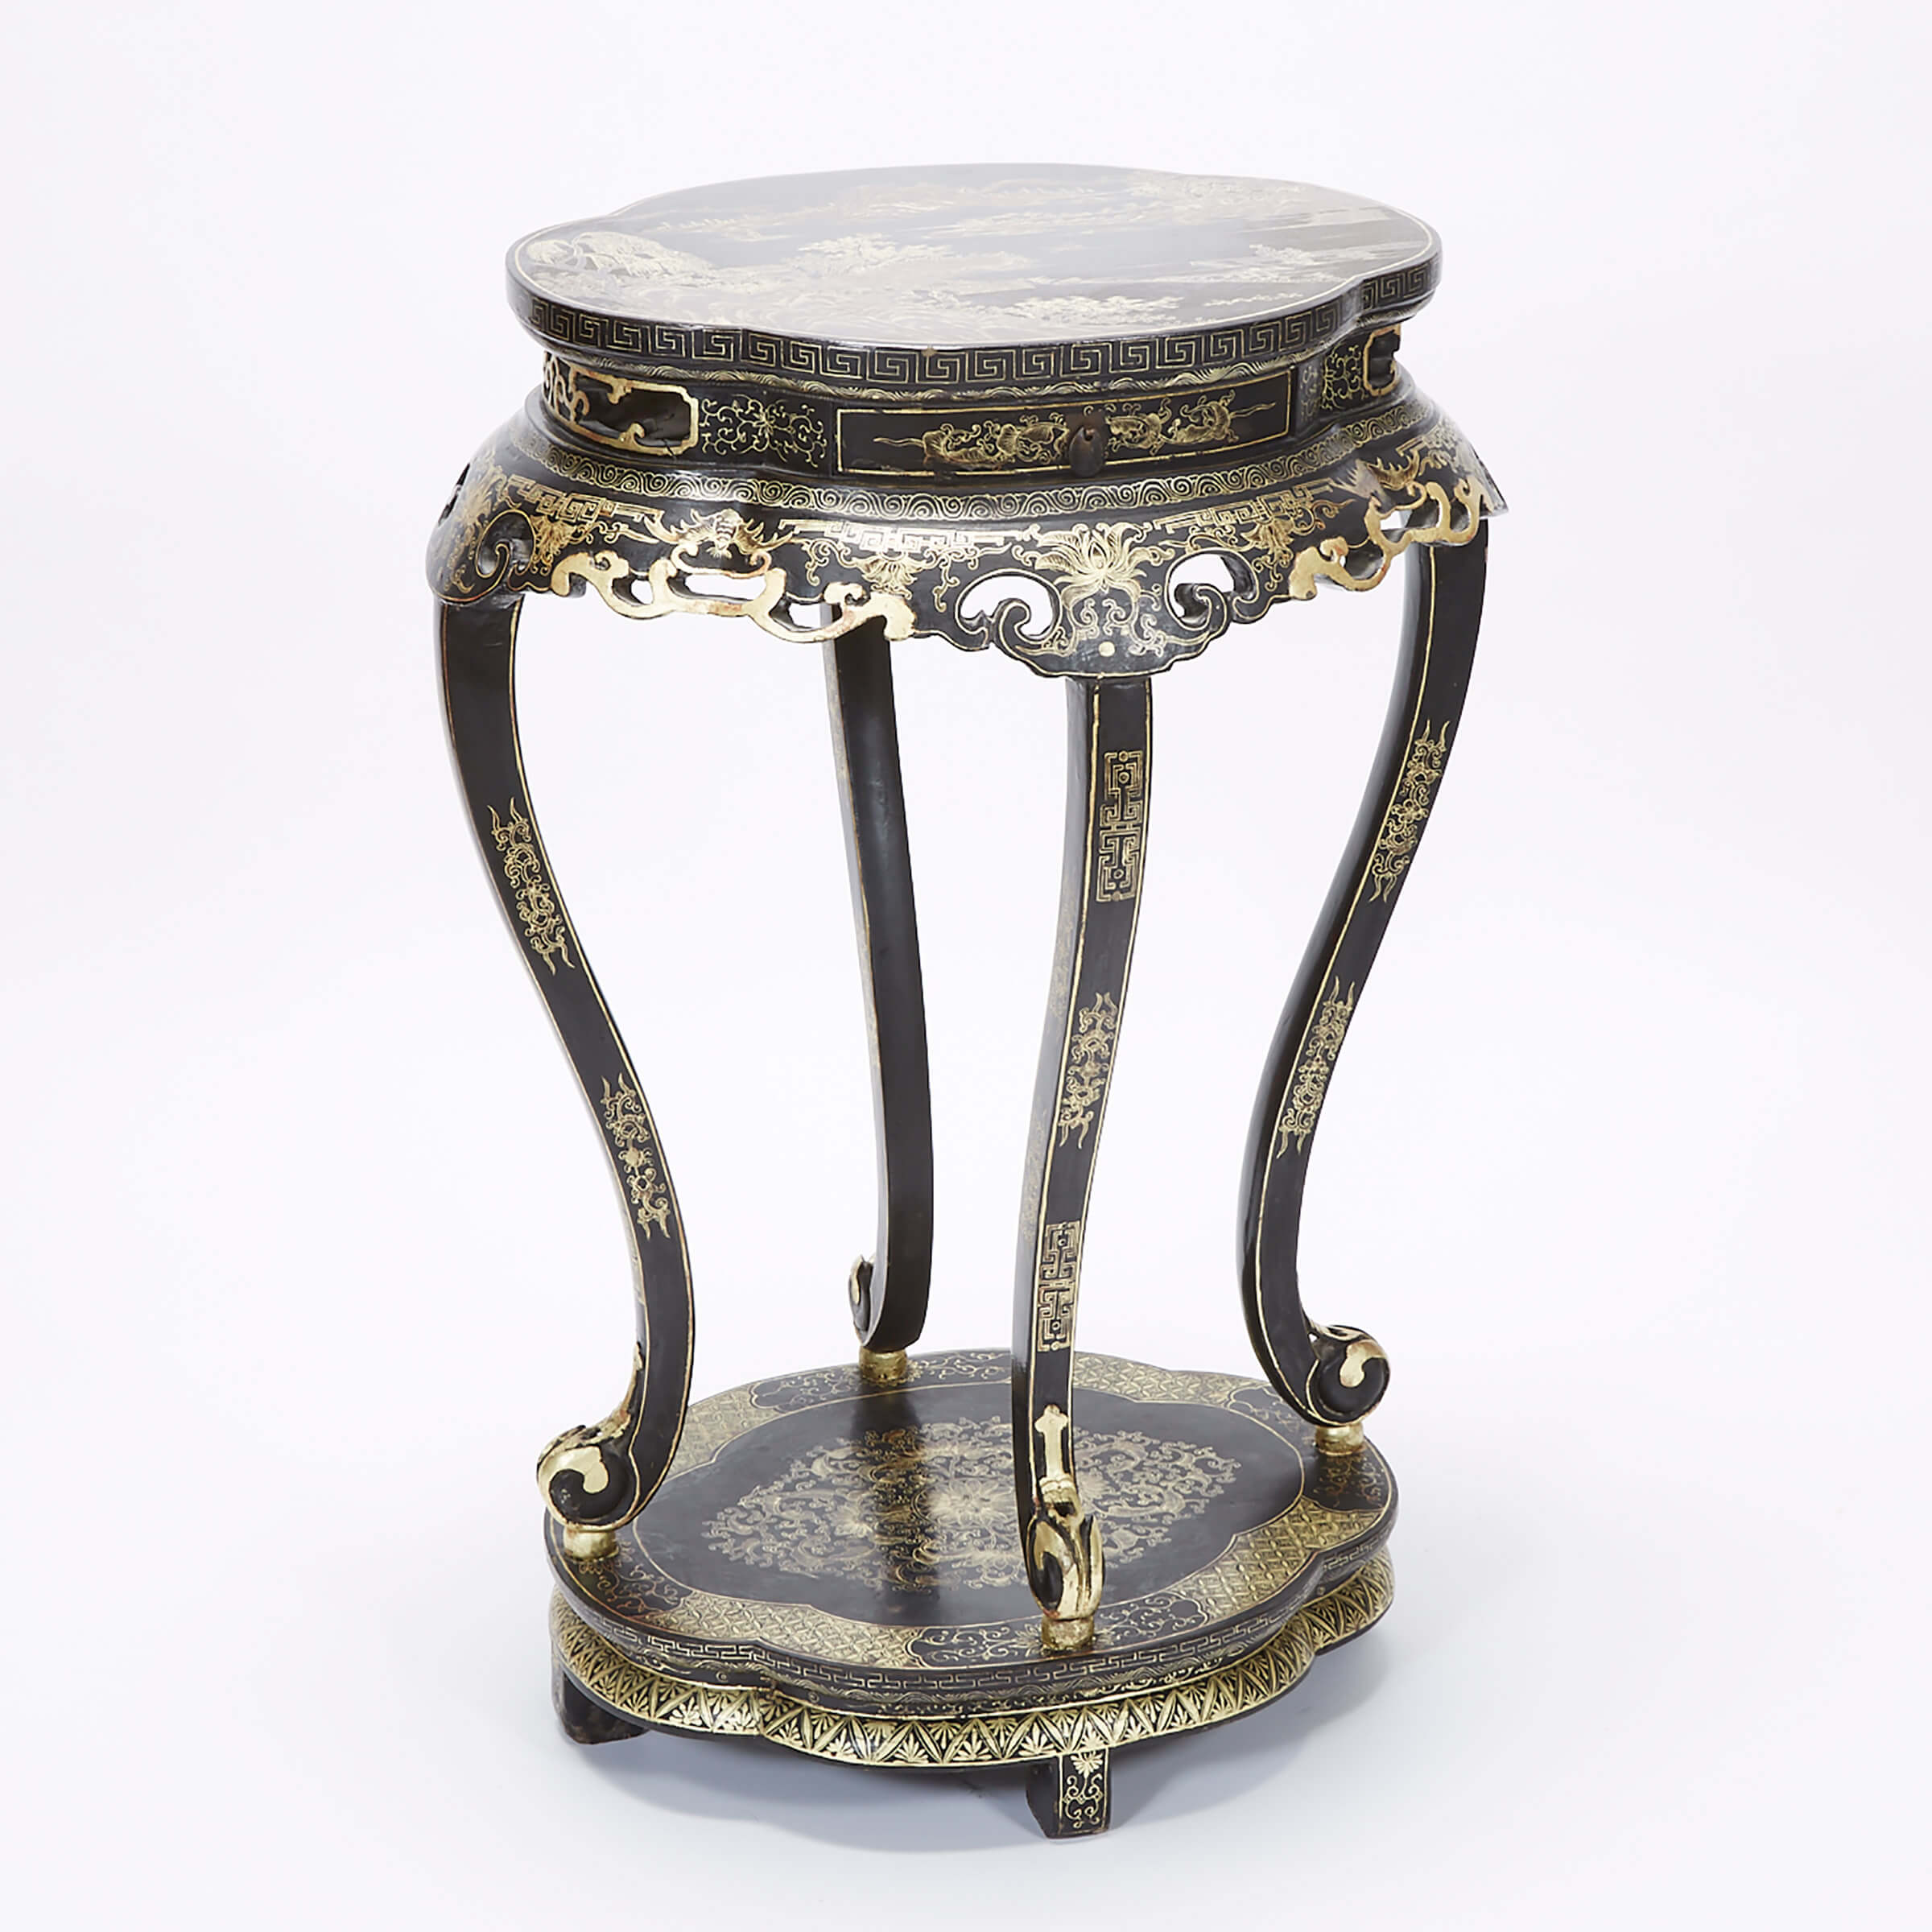 A Black Lacquer Pedestal Table, 19th Century